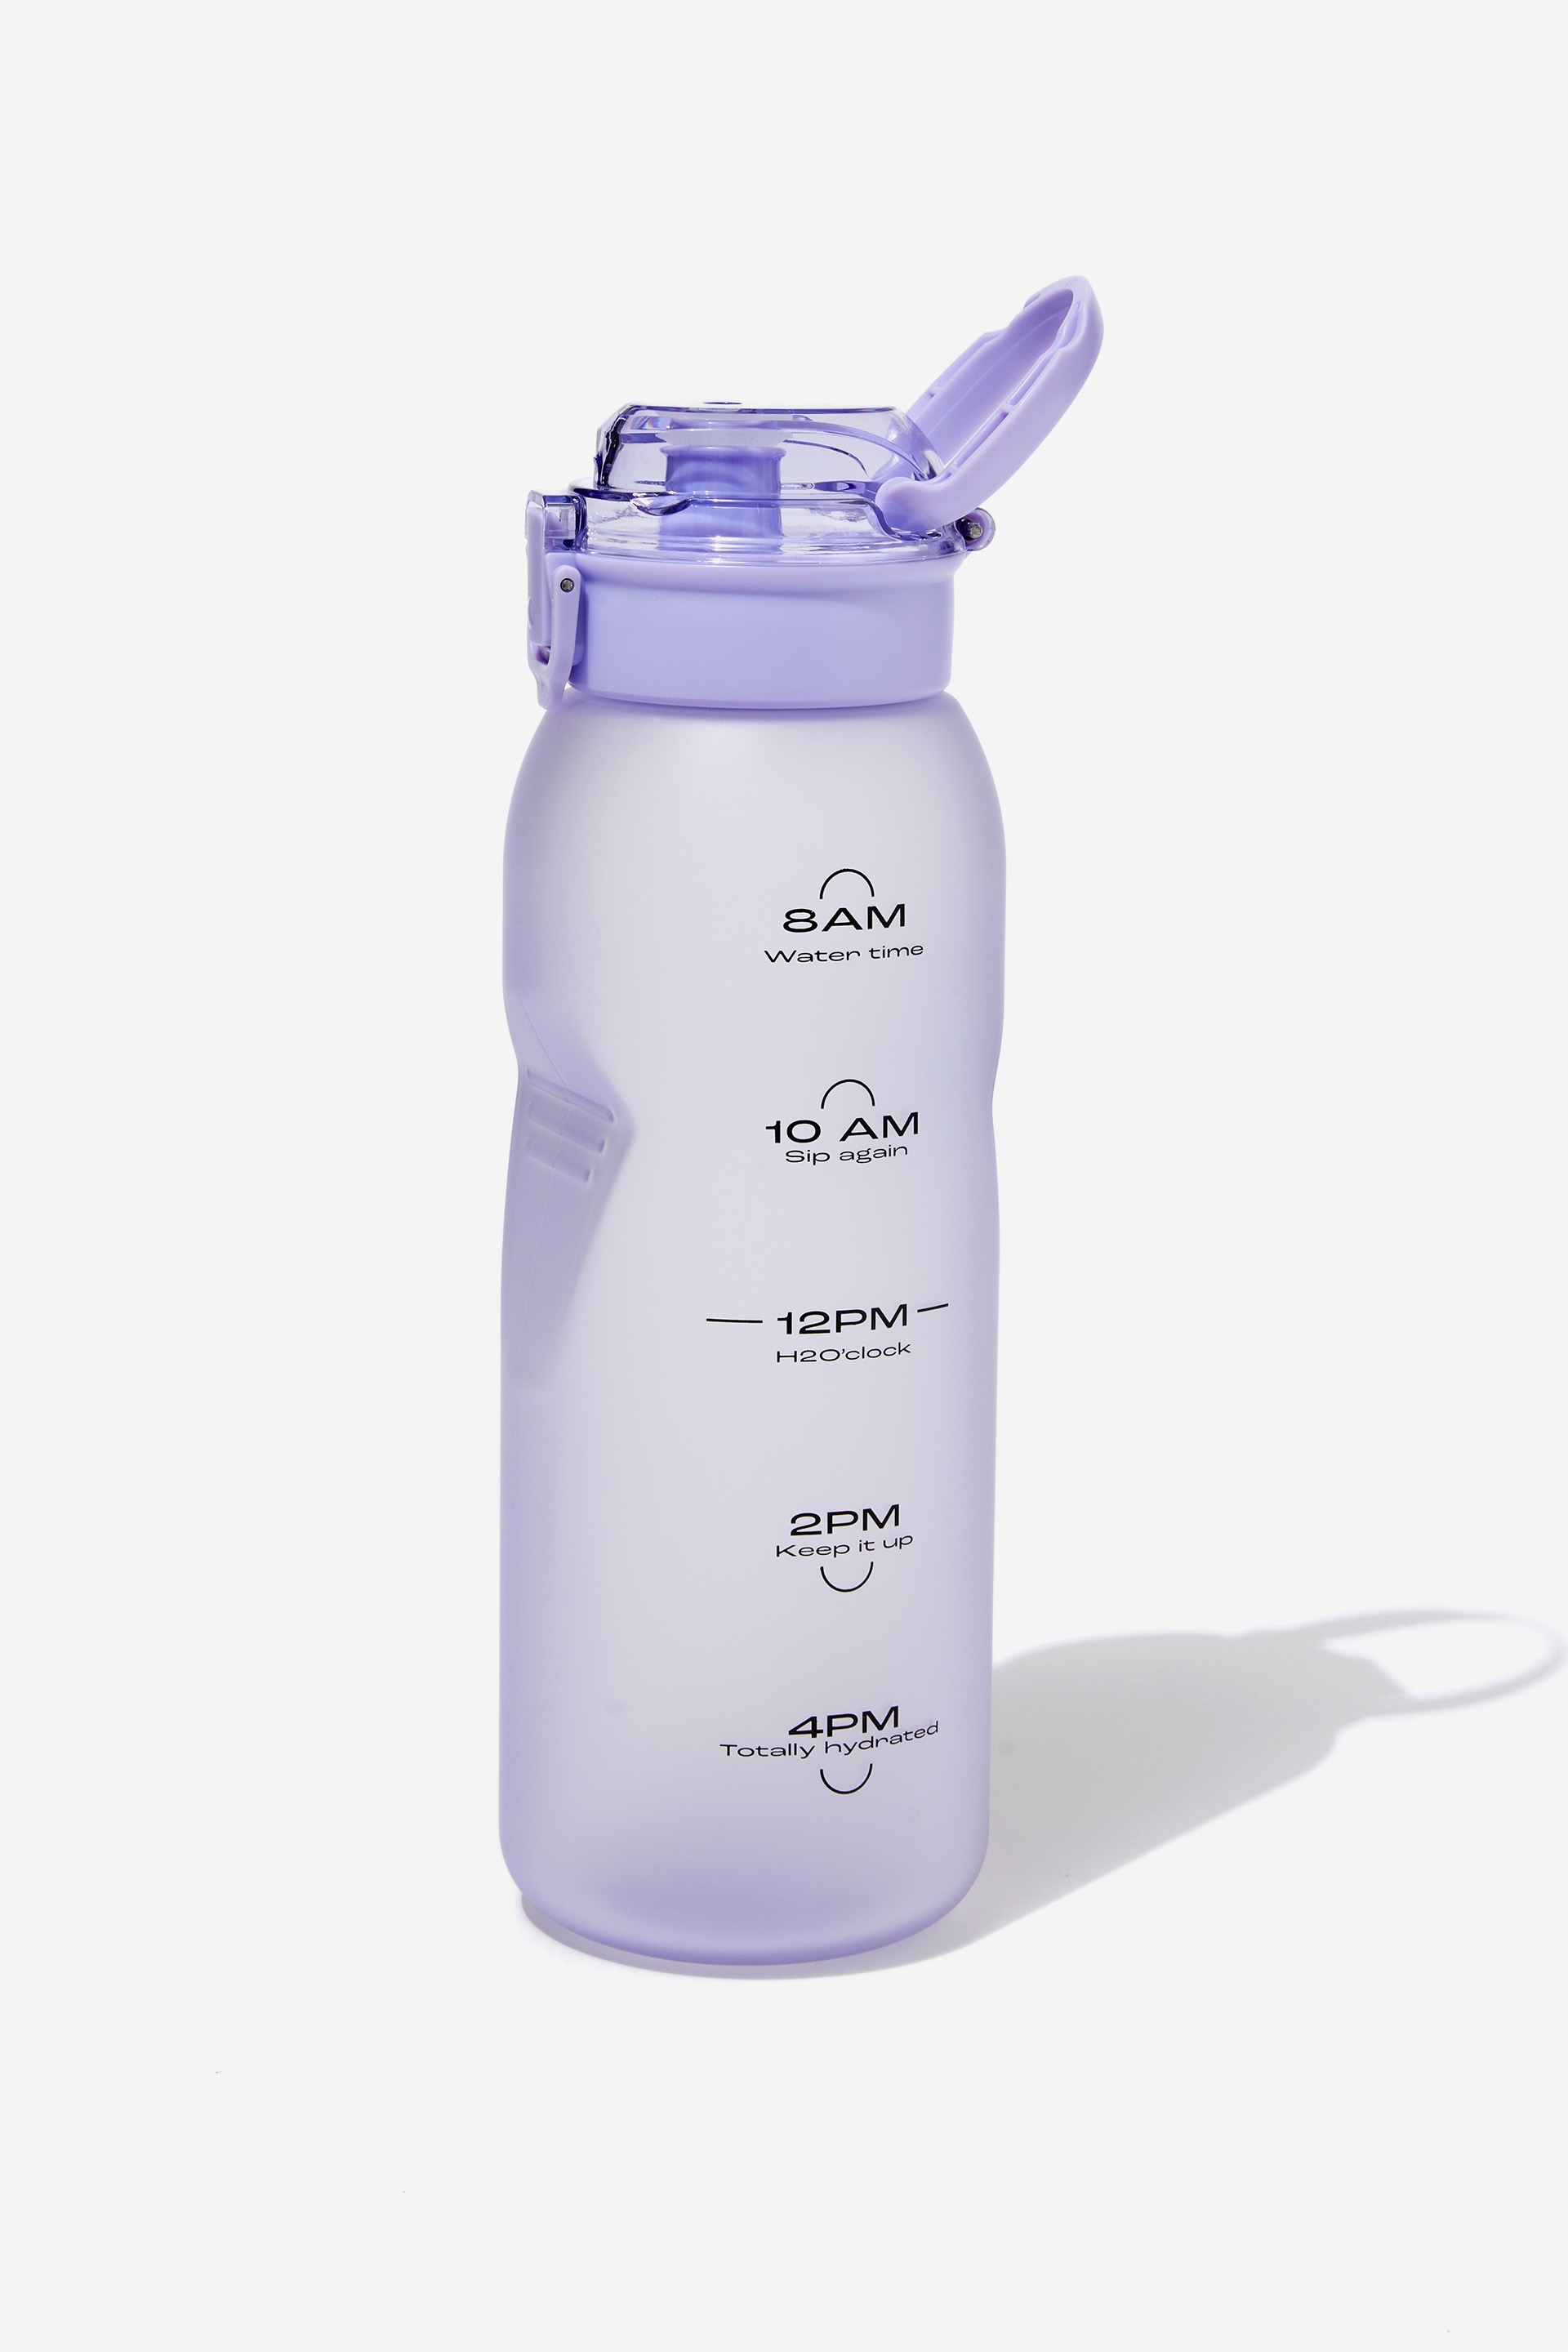 Typo - Heavy Lifter 1.5 L Drink Bottle - Matte soft lilac